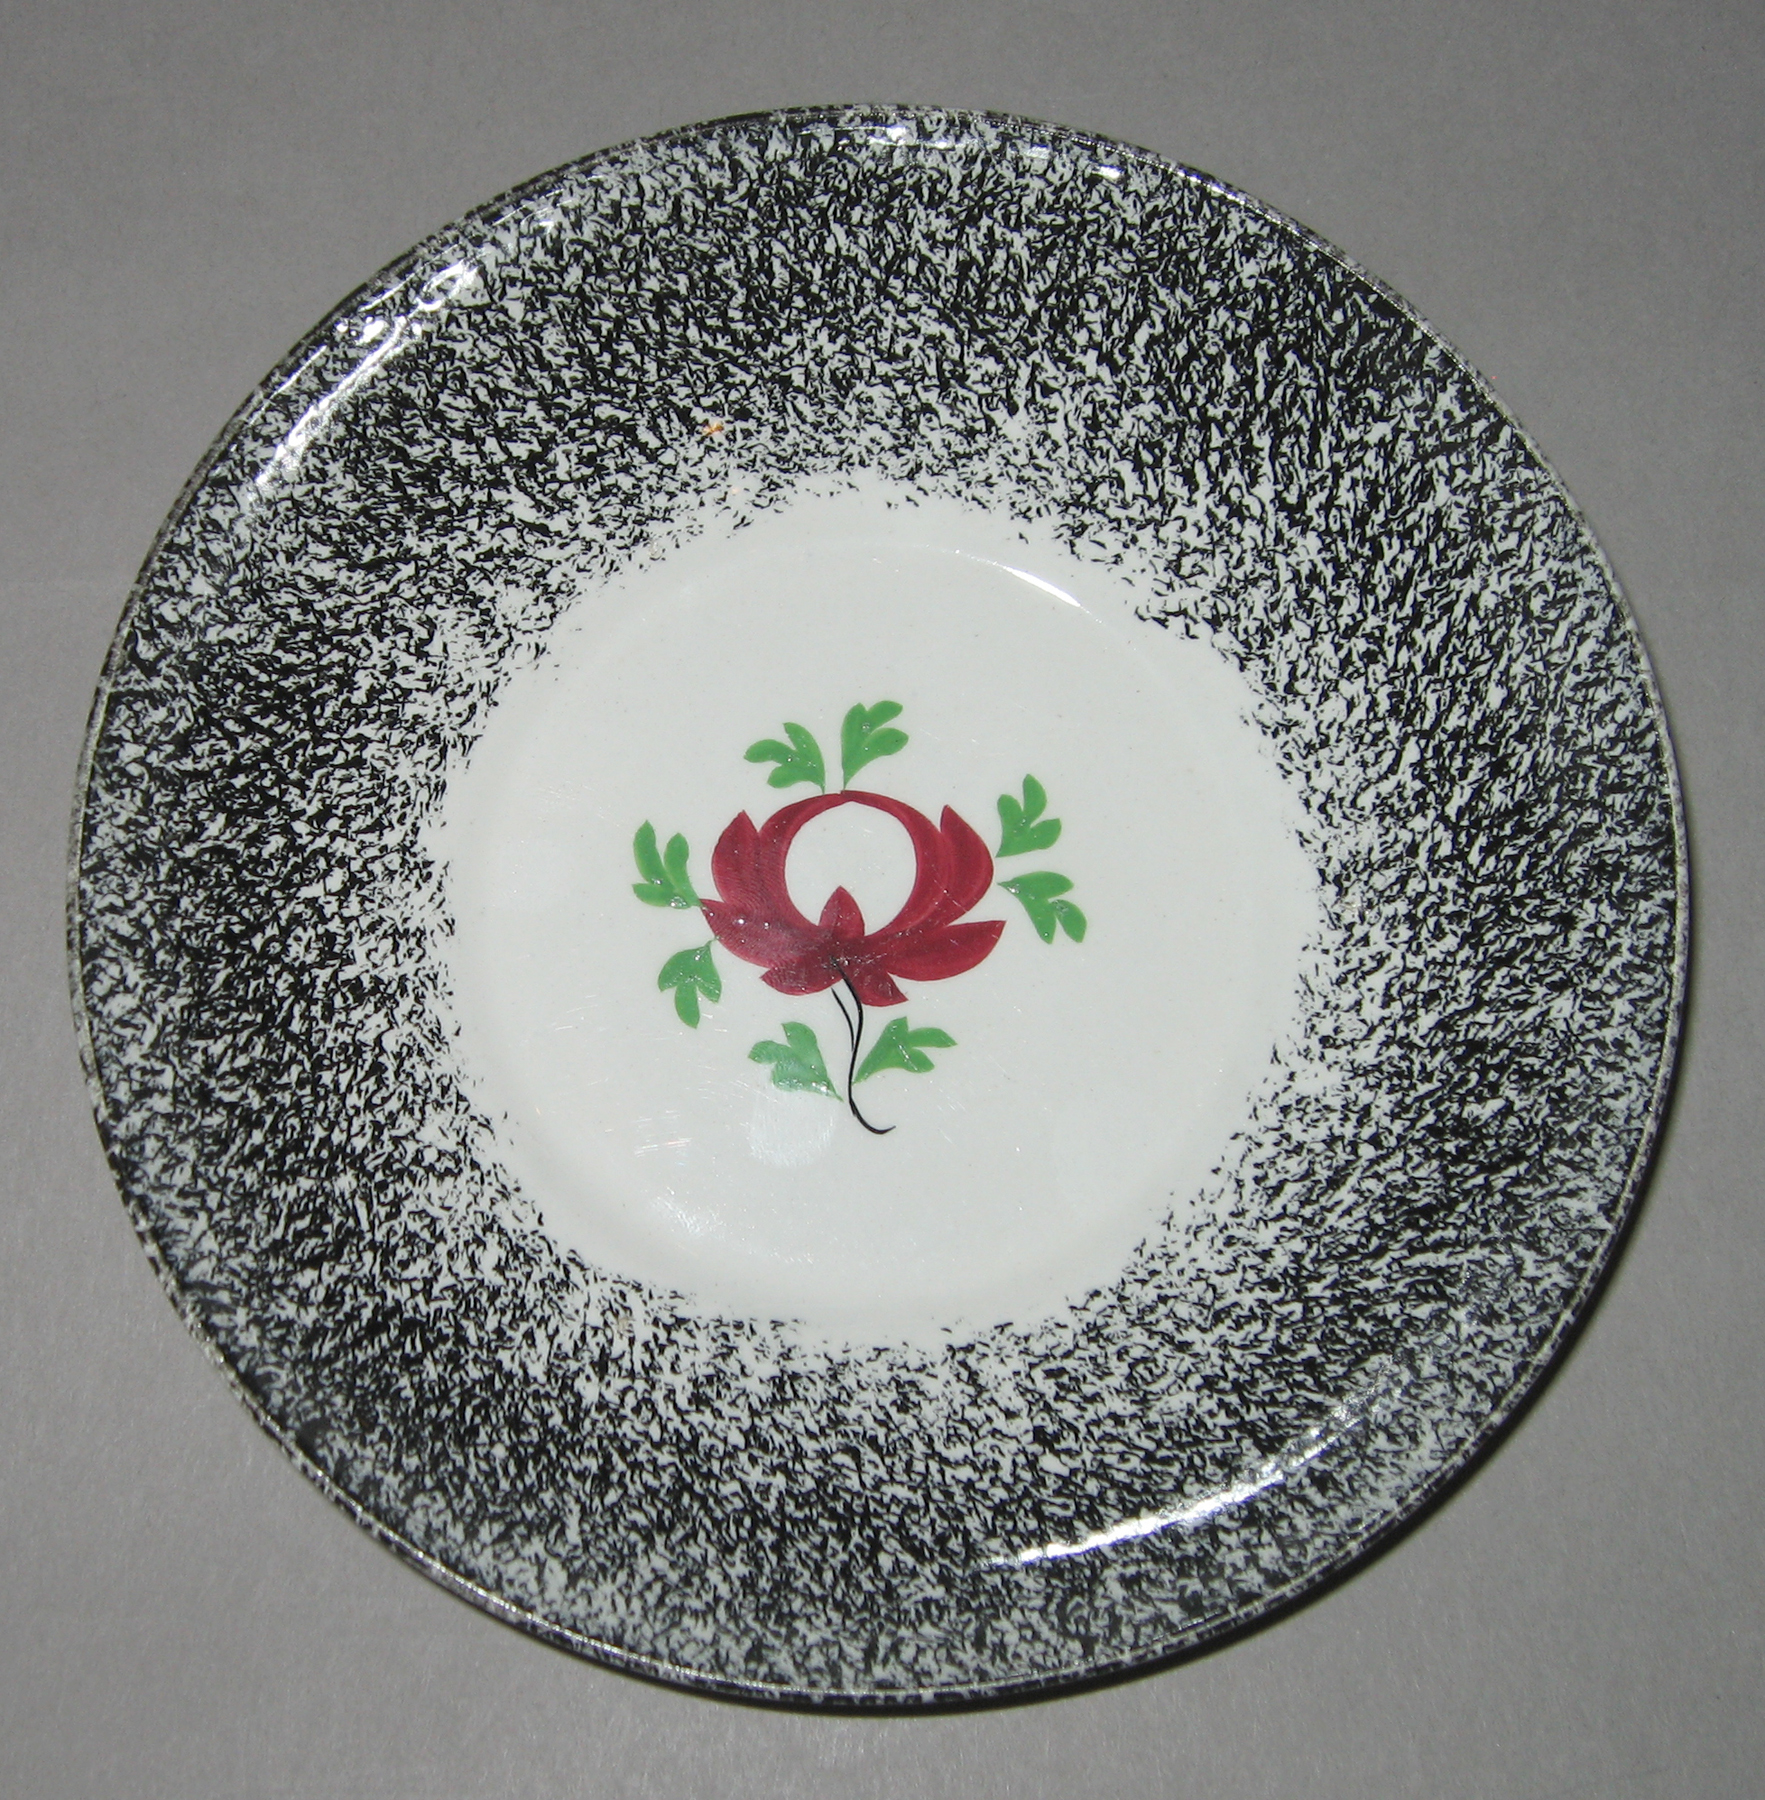 1965.0950 B Spatterware saucer